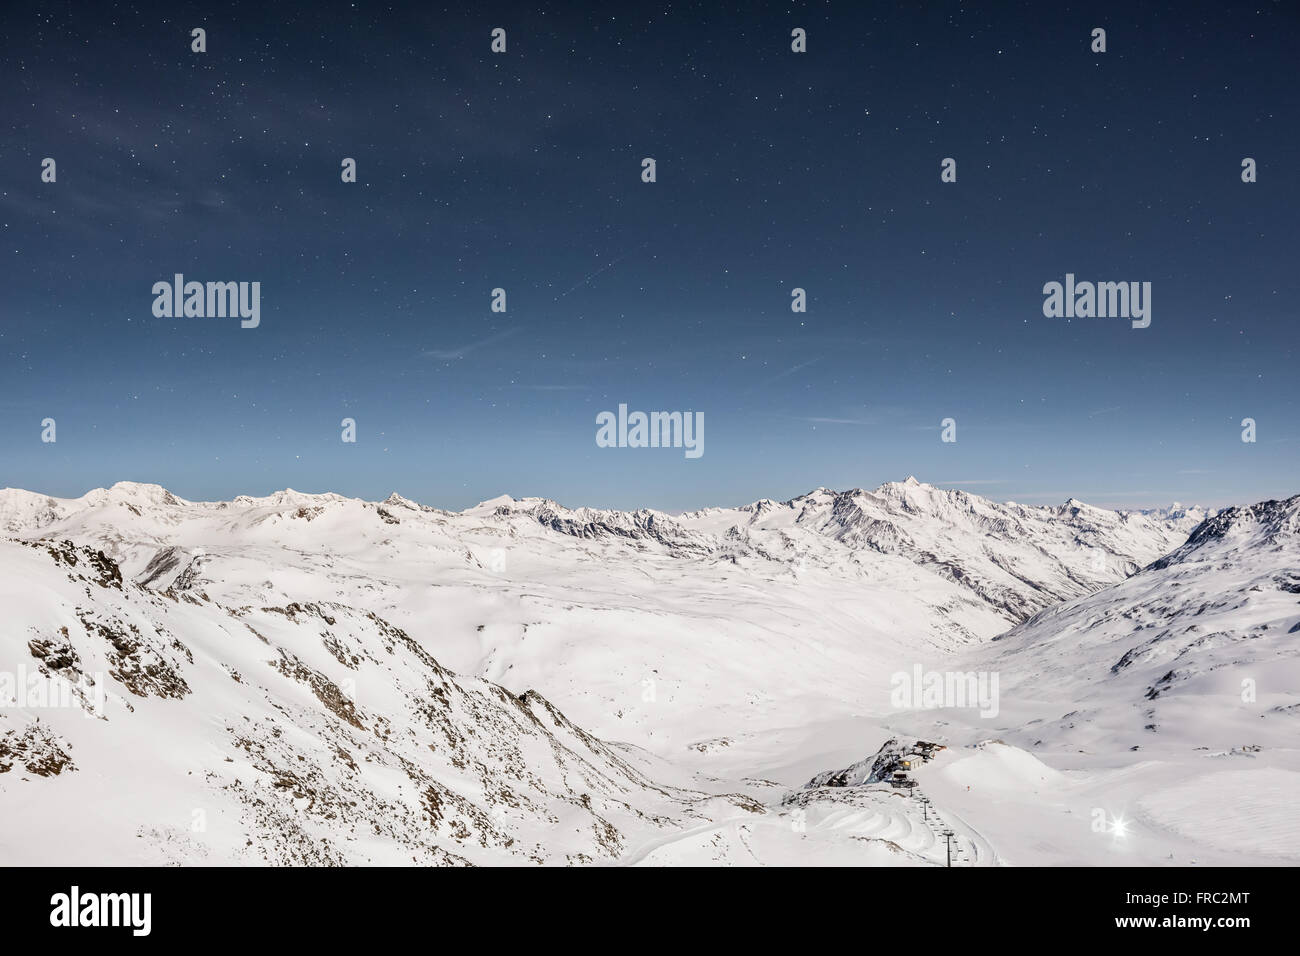 Snowy Alps with night sky Stock Photo